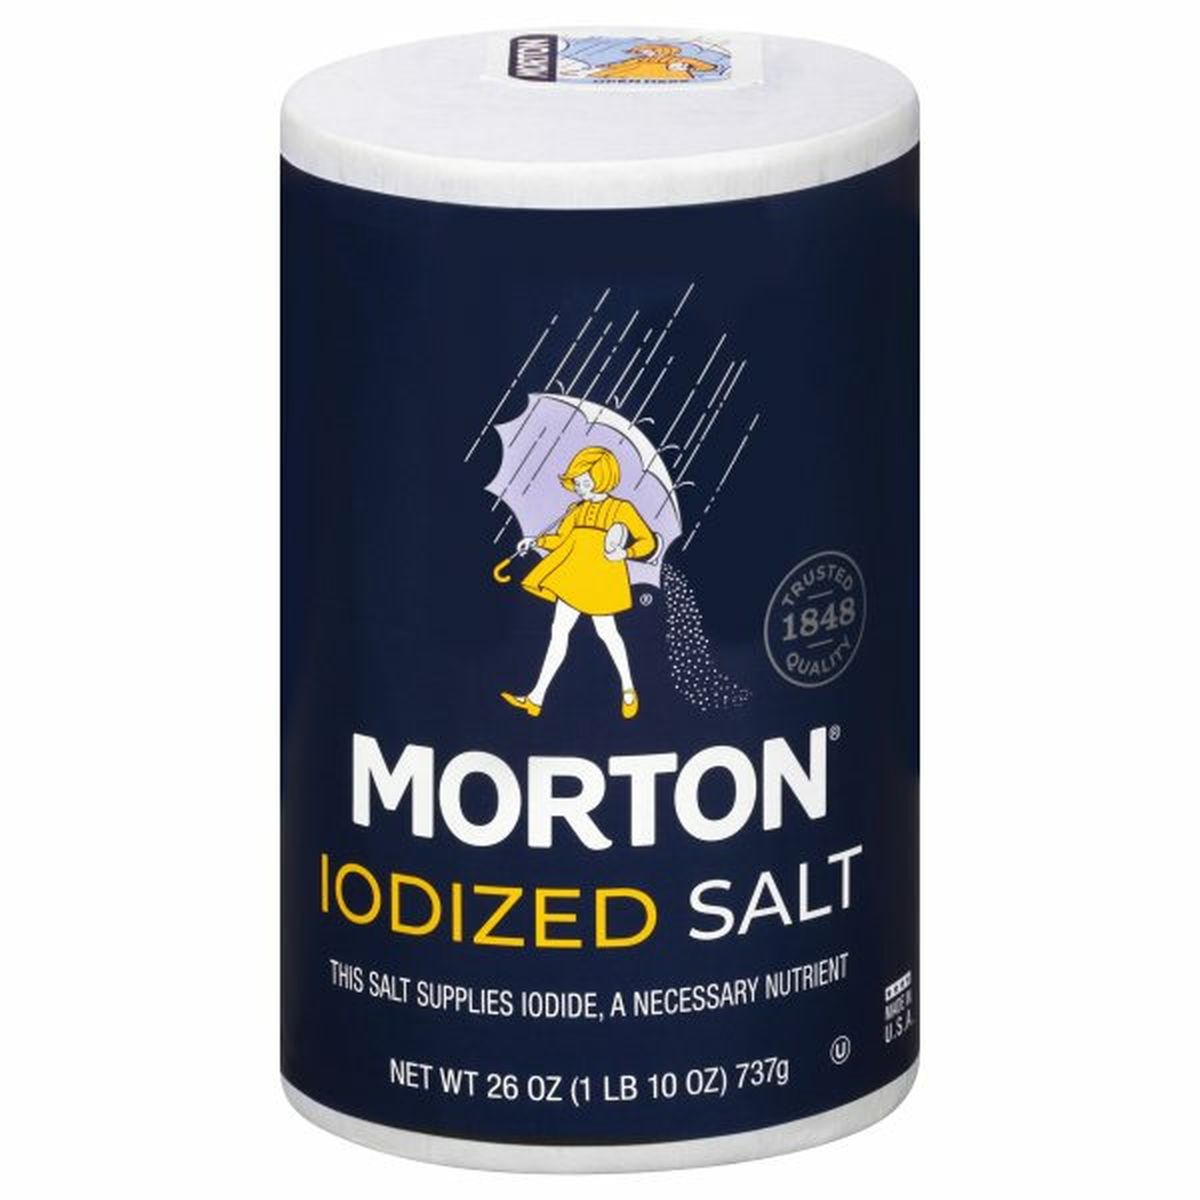 Calories in Morton Iodized Salt